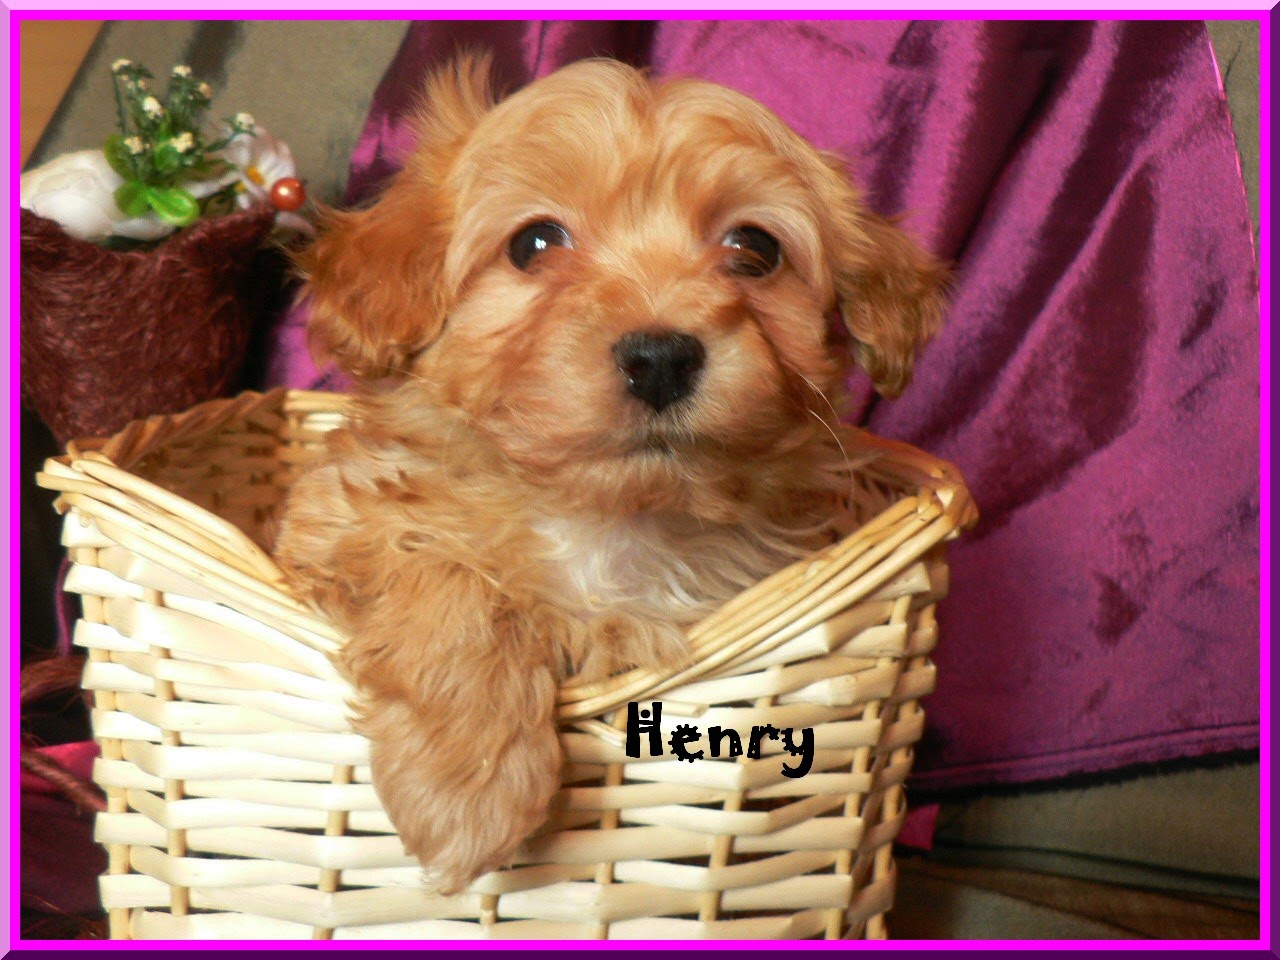 Henry de pequeñajo.